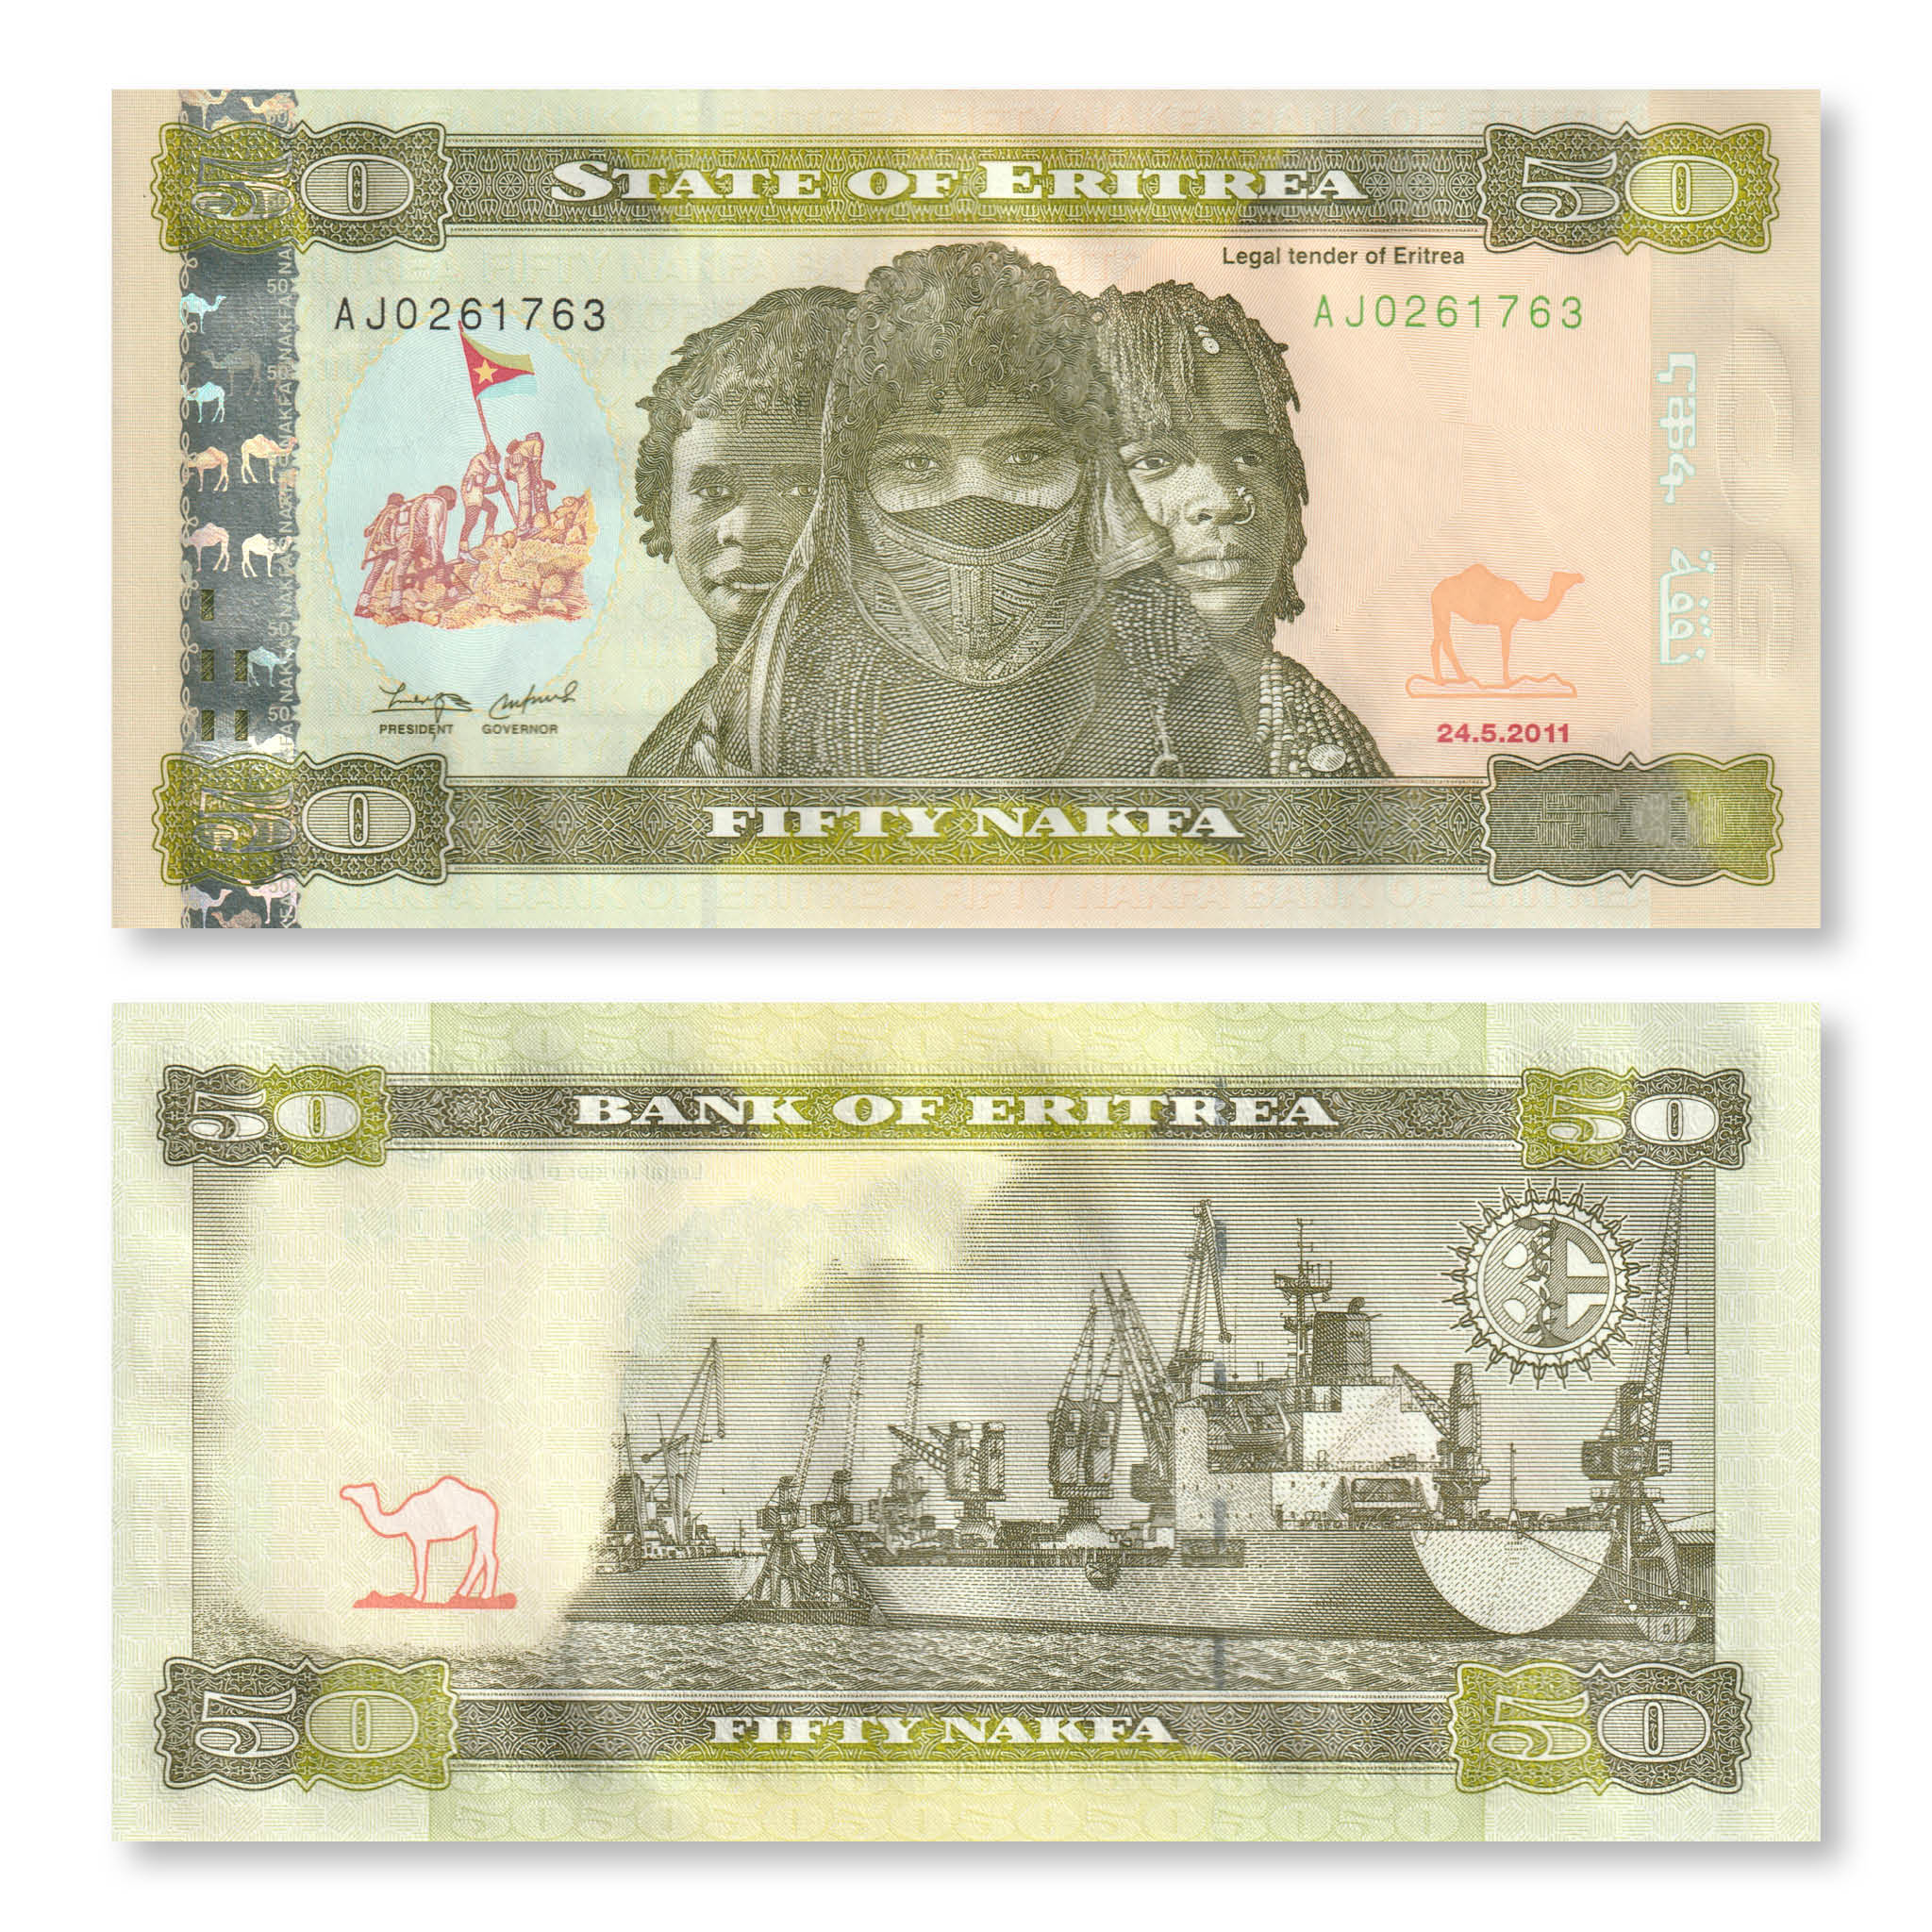 Eritrea 50 Nafka, 2011, B111a, P9, UNC - Robert's World Money - World Banknotes